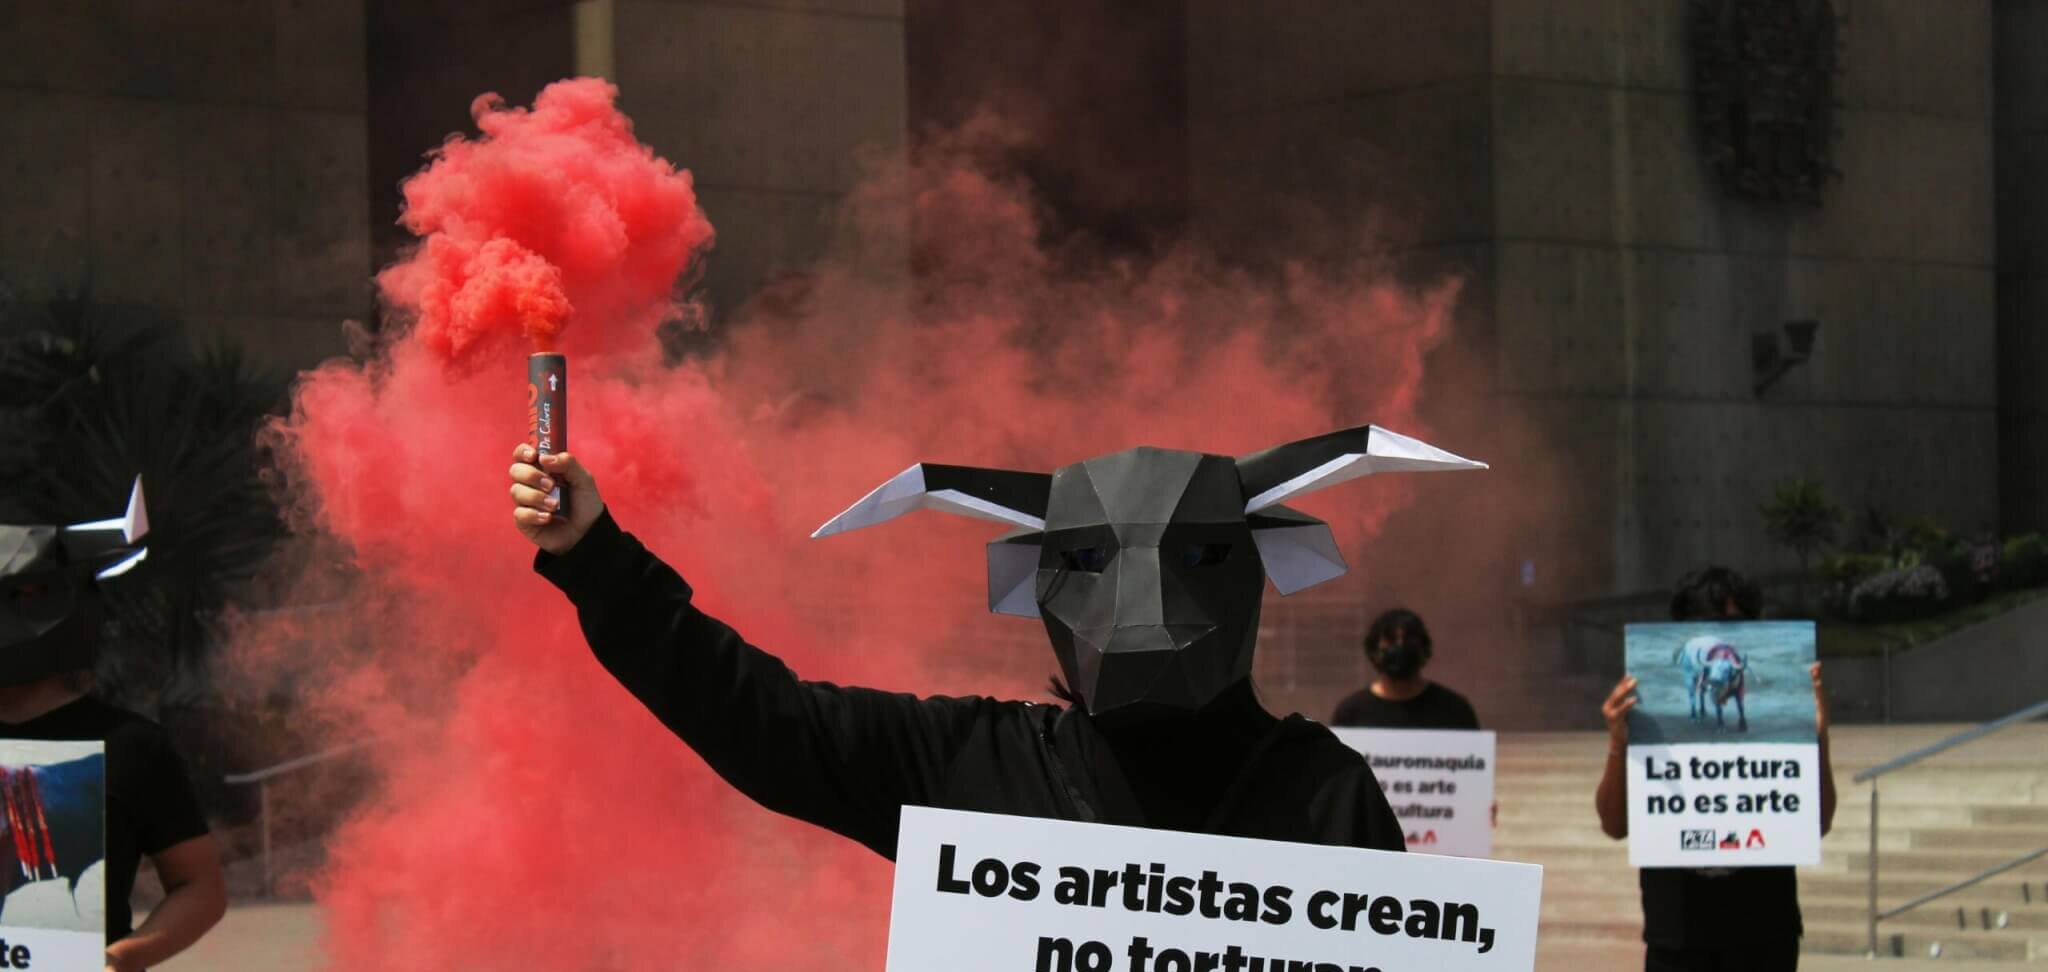 A PETA Latino demo protest in Peru against cruel bullfighting